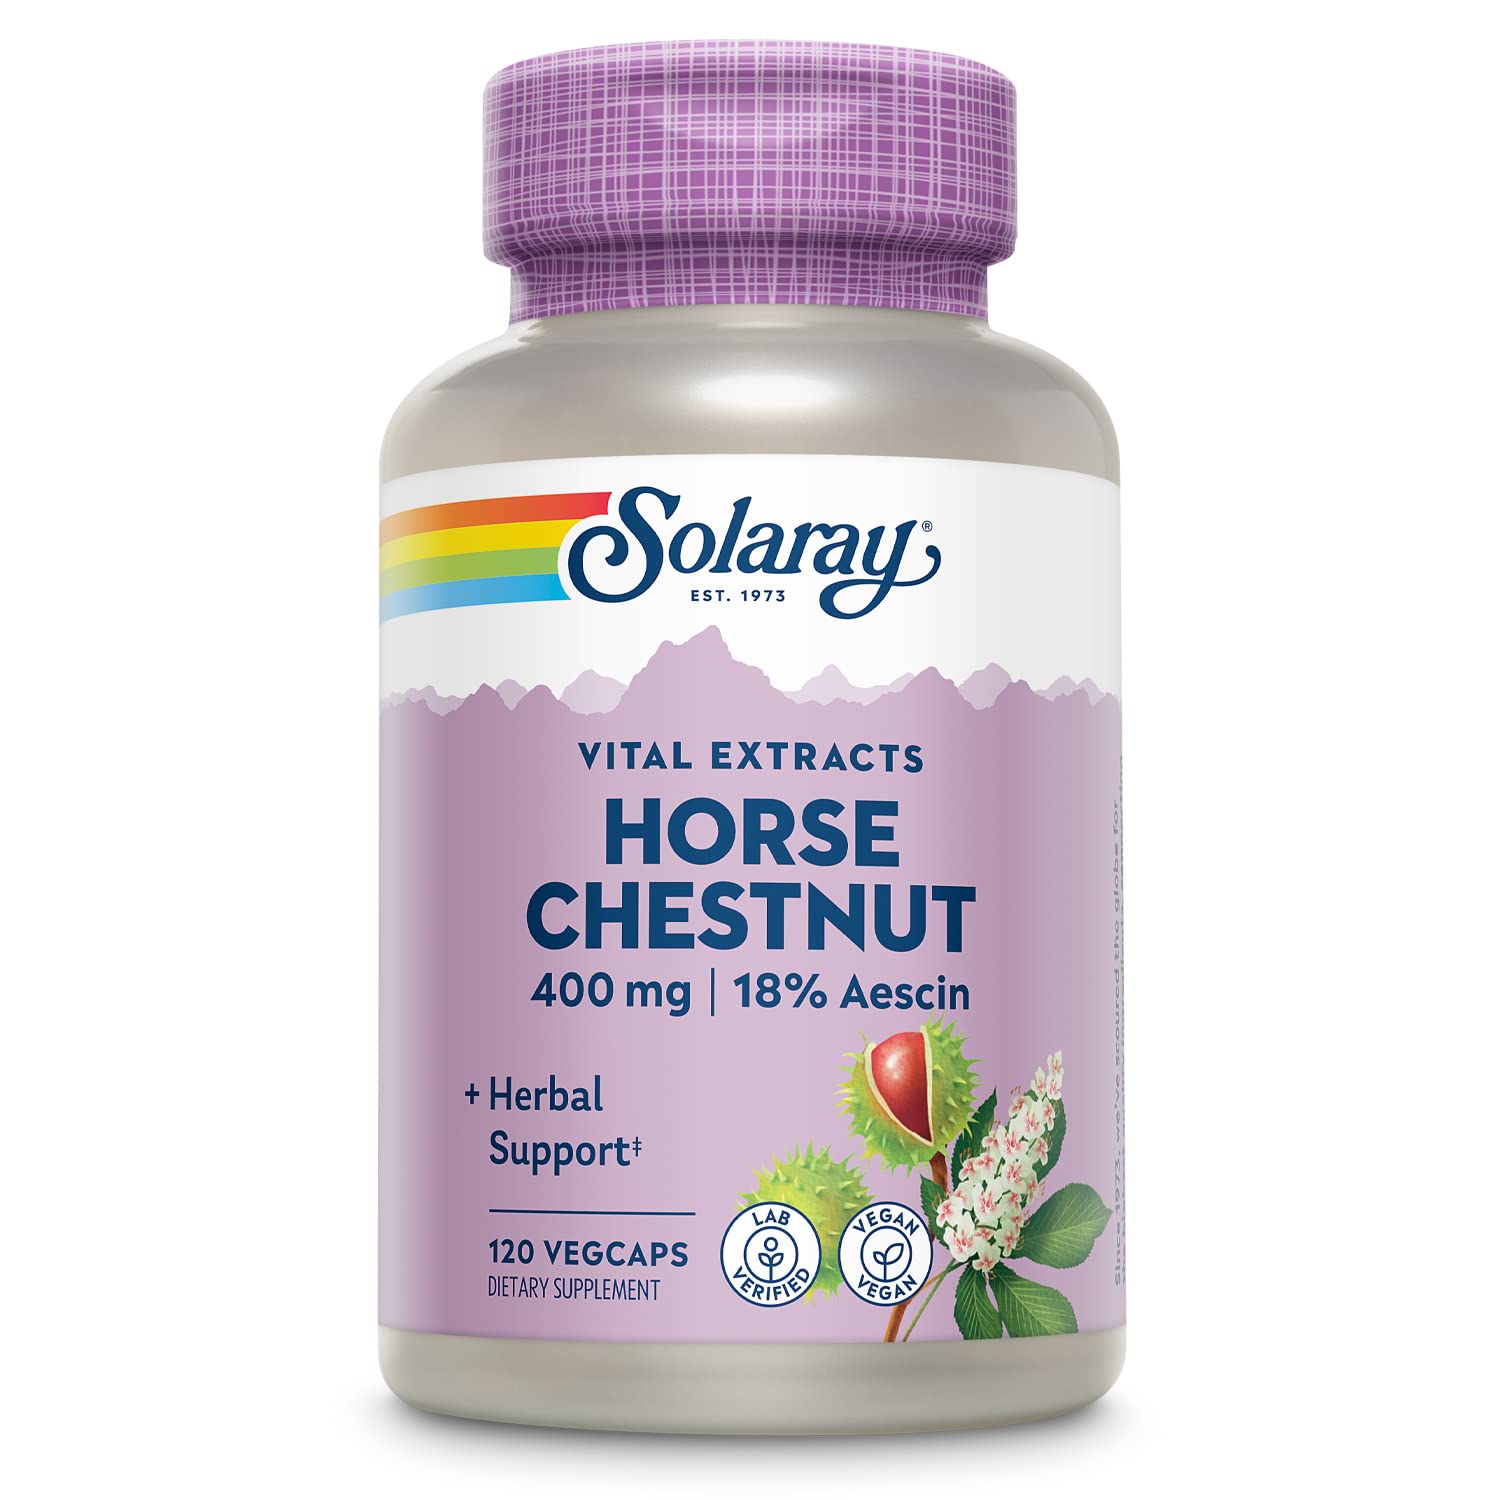 Solaray Horse Chestnut Seed Extract 120ct VegCap